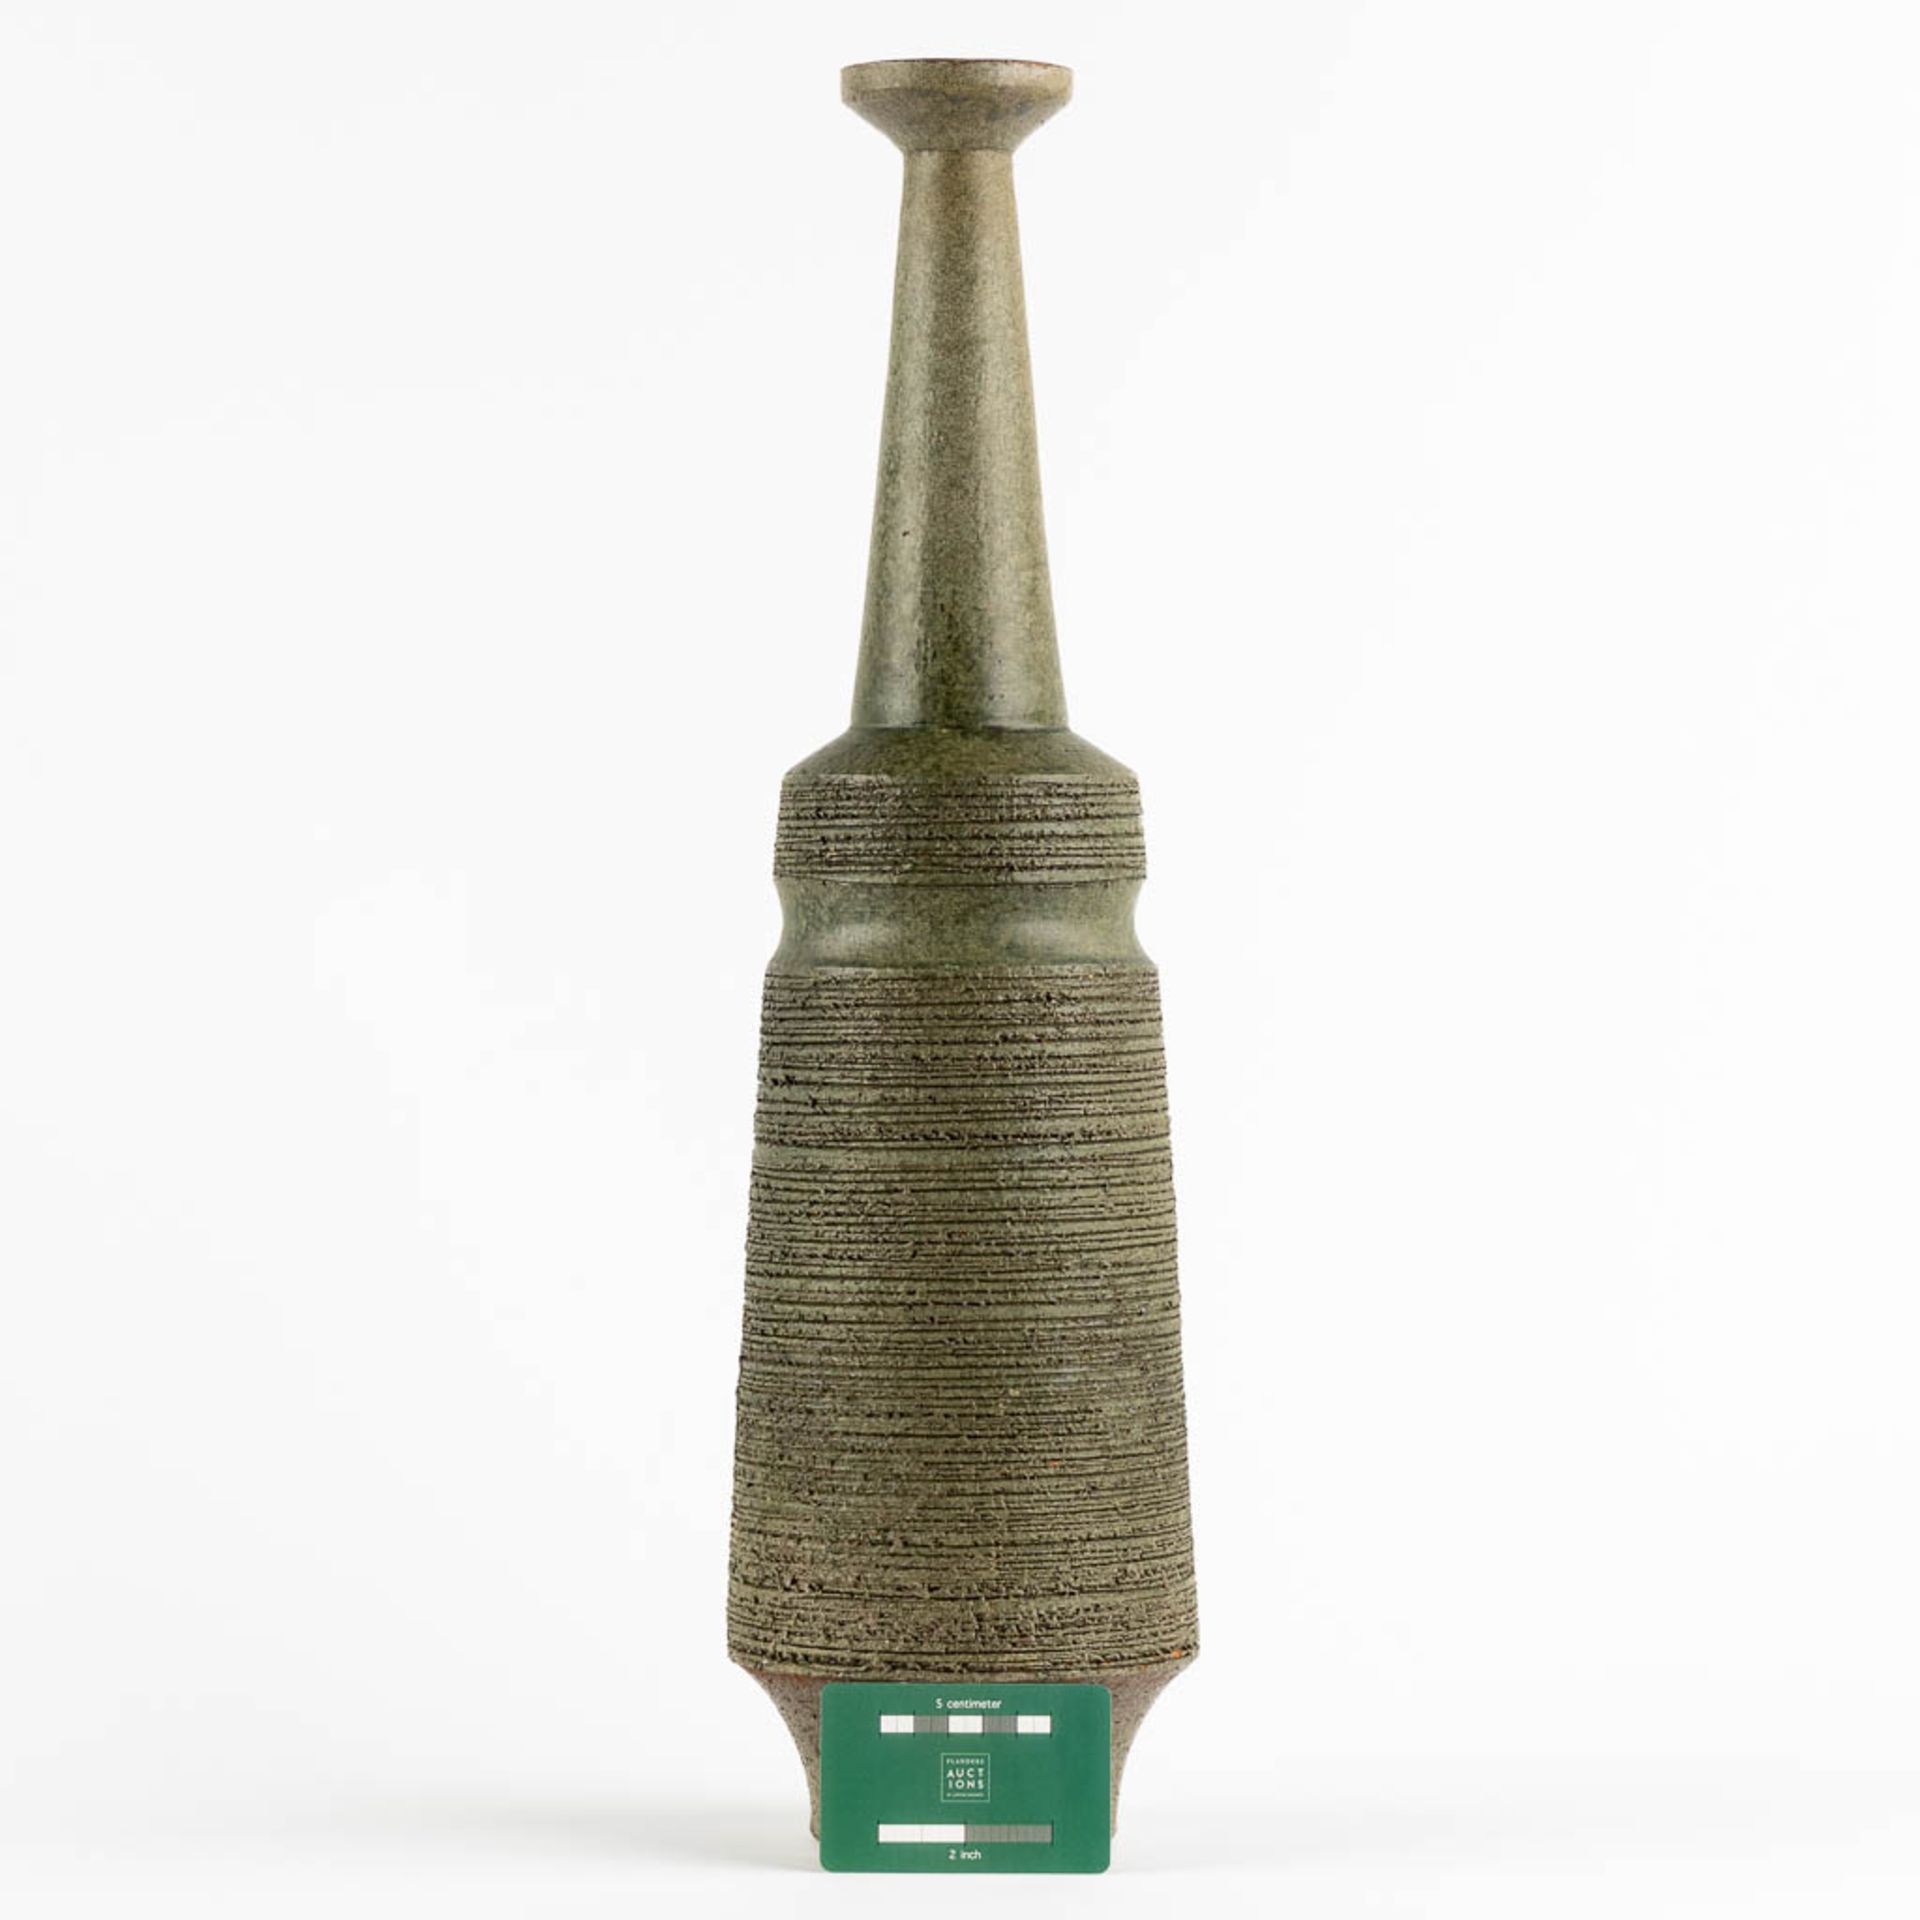 Amphora or Keramar, a large green vase, glazed ceramics. (H:53 x D:14 cm) - Bild 2 aus 10